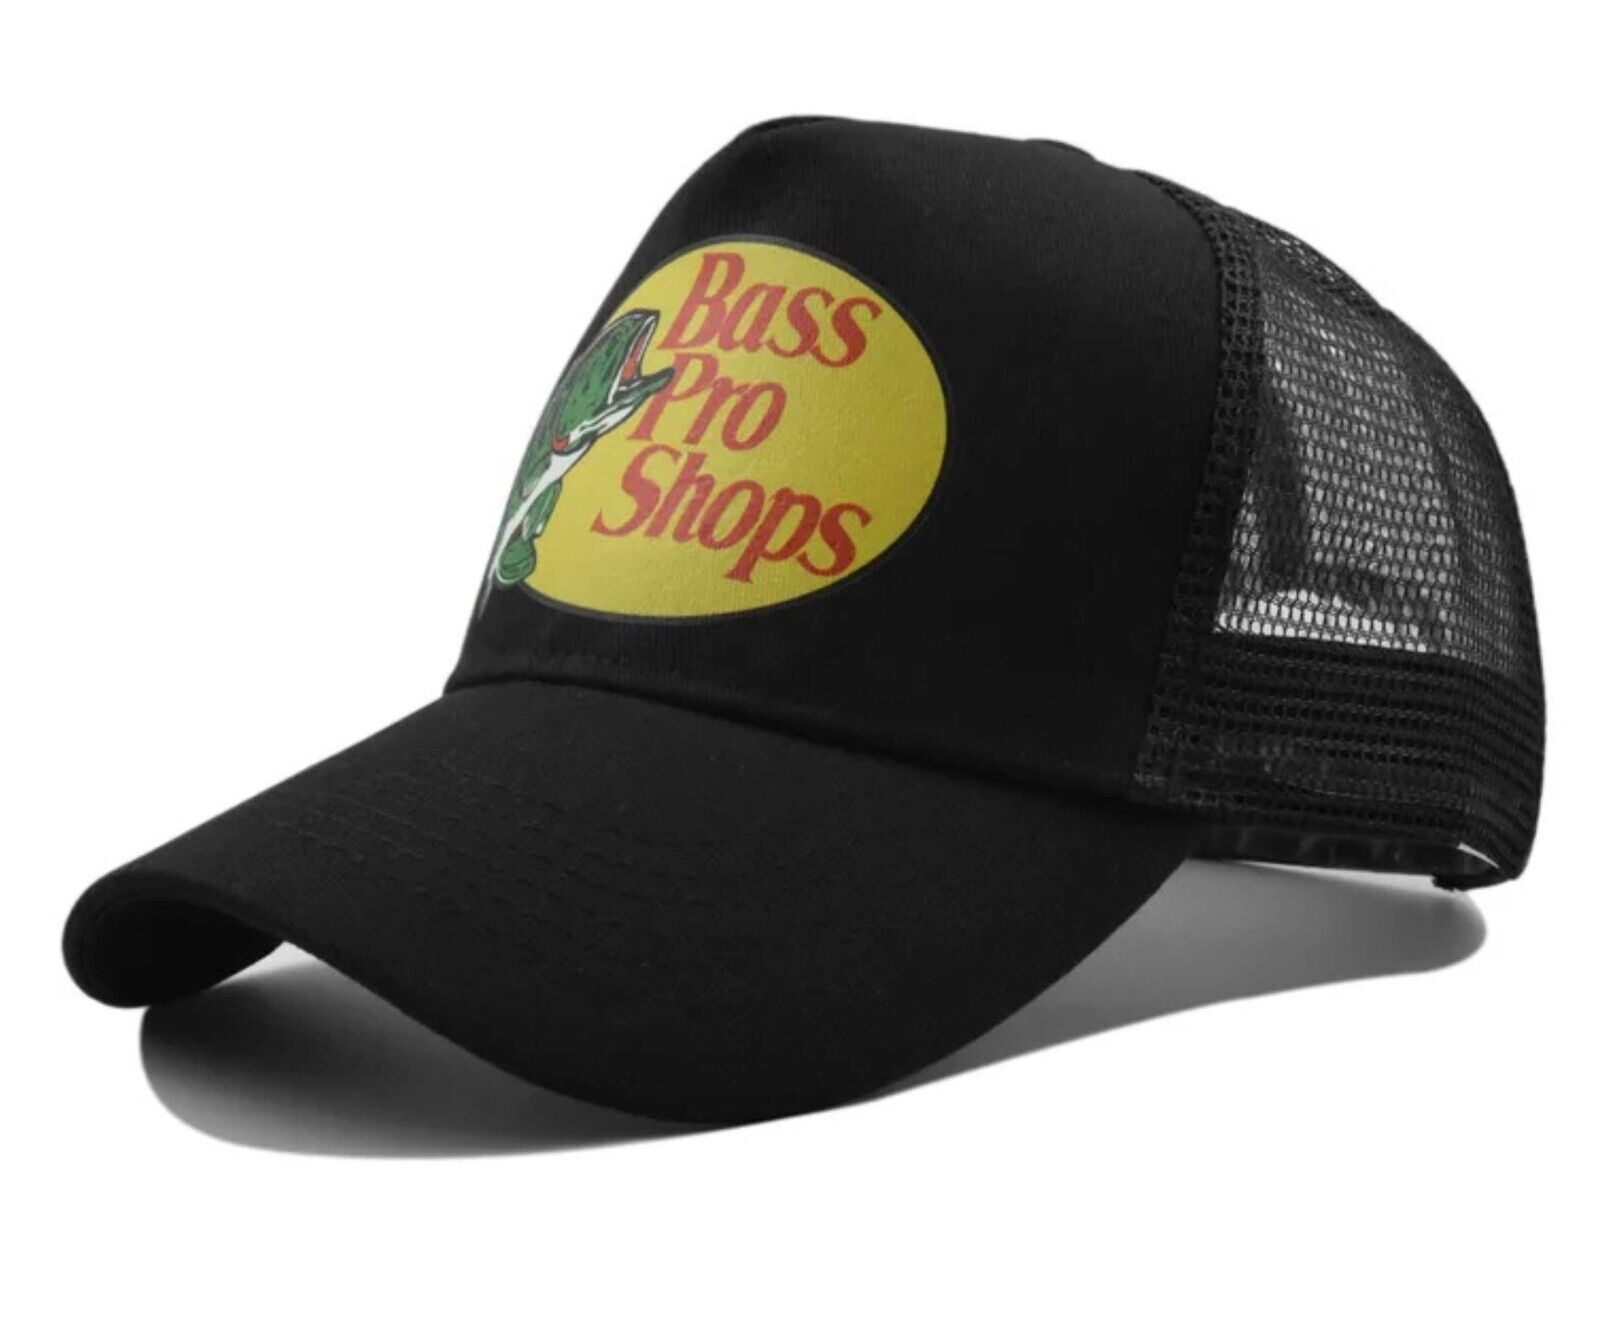 BASS PRO SHOPS Hat Outdoor Fishing Baseball Trucker Mesh Cap Adjustable SnapBack